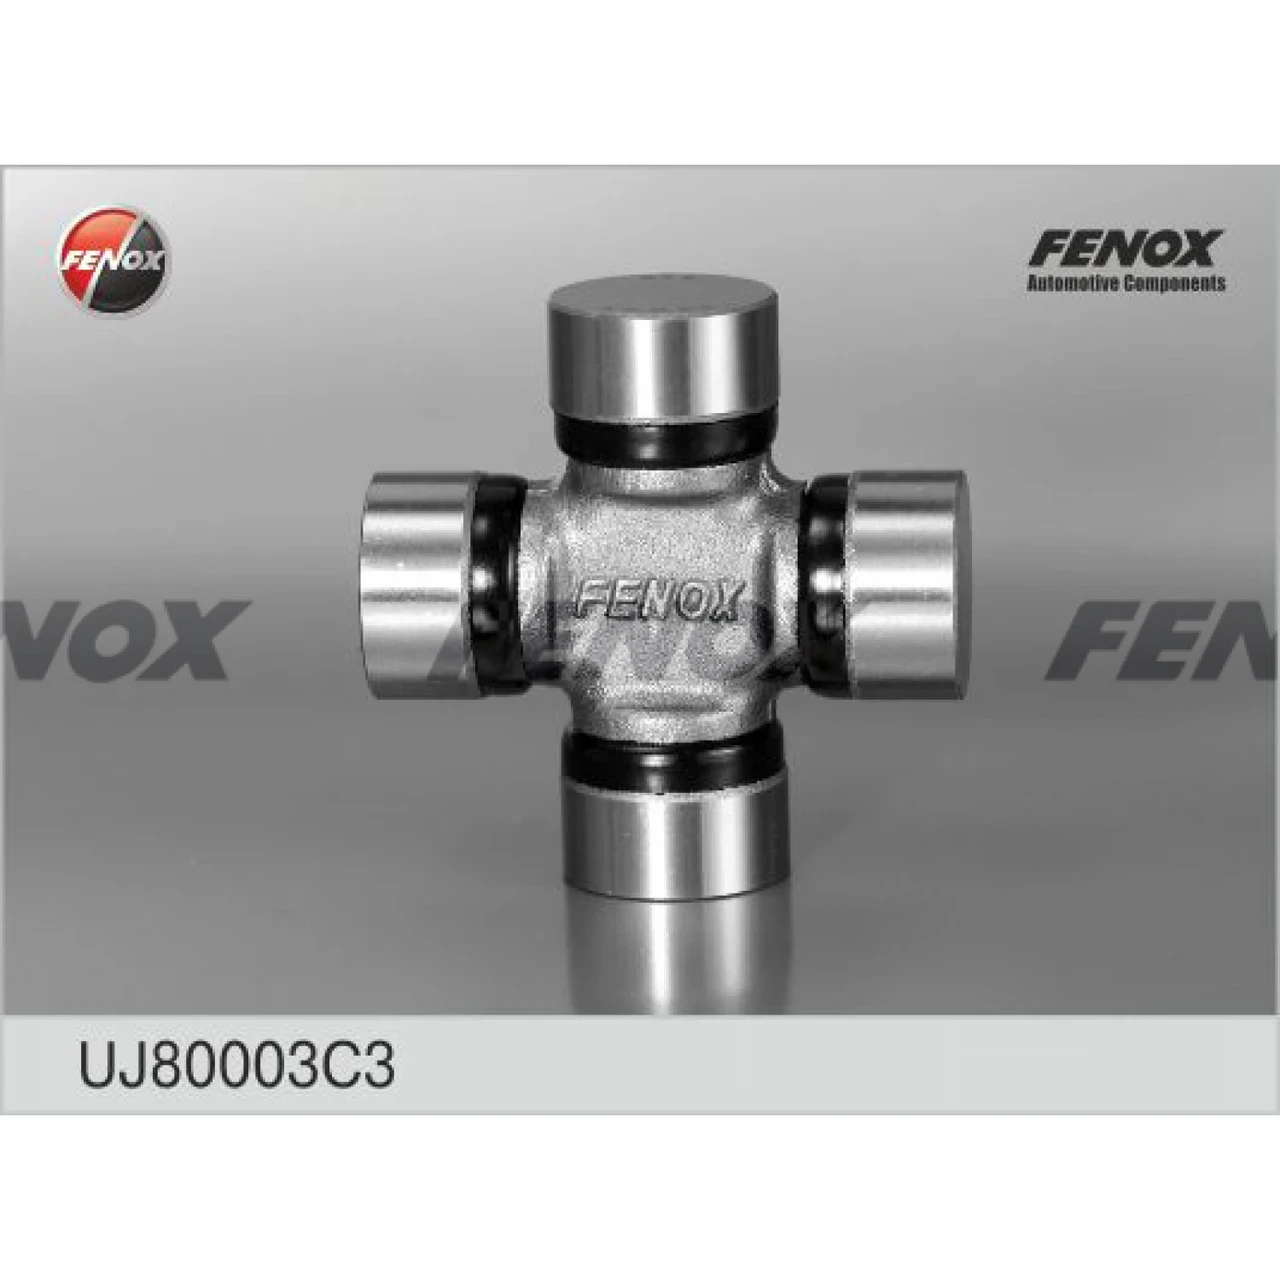 Хрестовина Fenox 2121,23 ВАЗ UJ80 003 C3 (С5) (UJ80003C3)